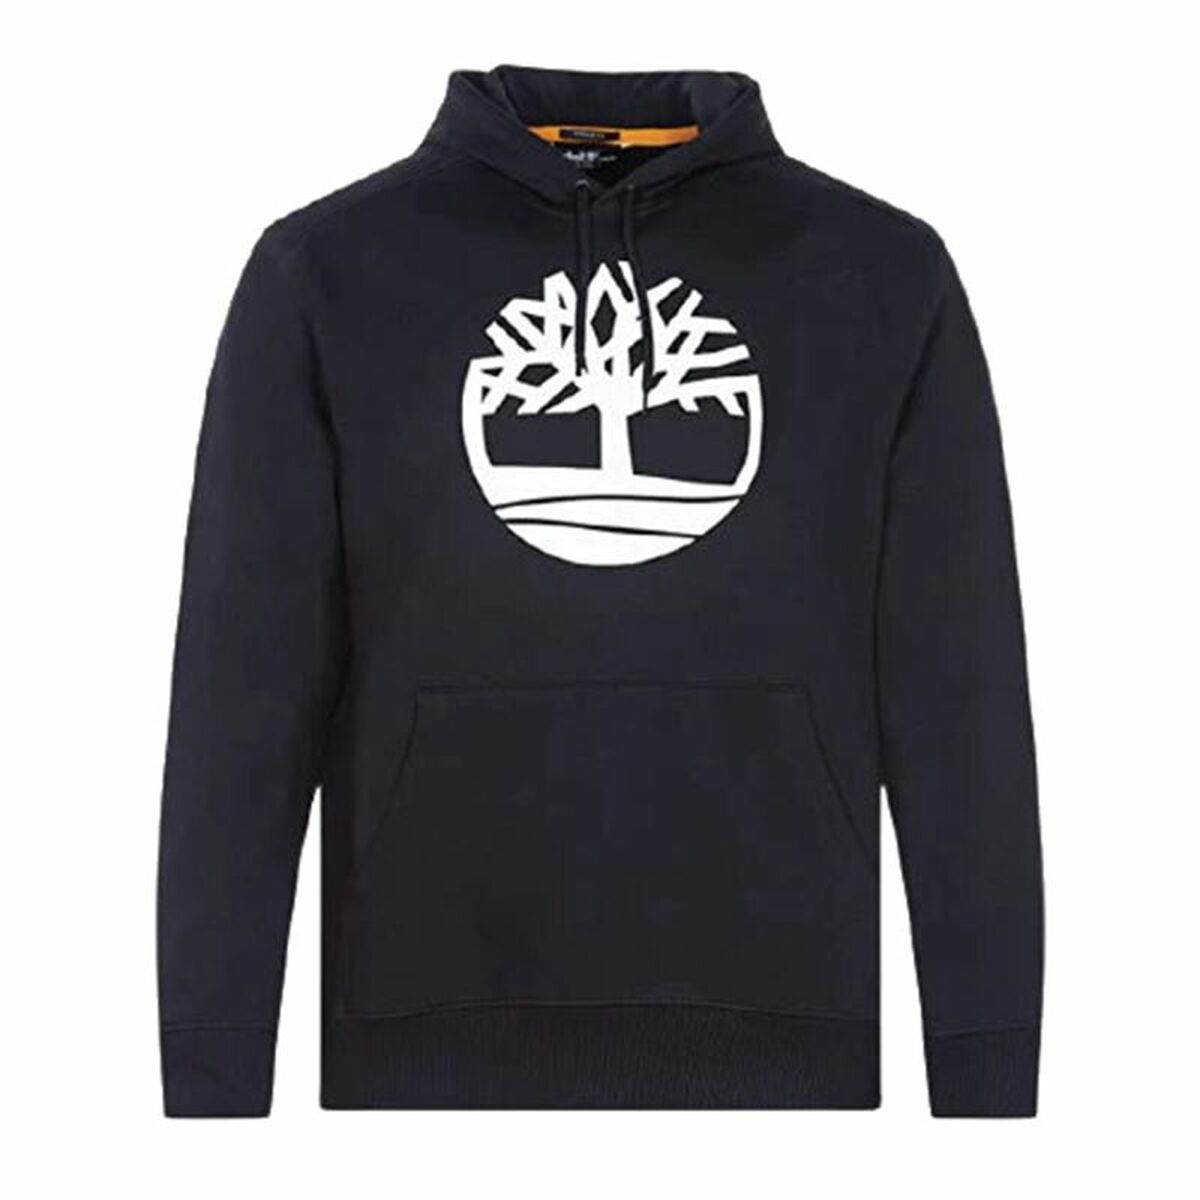 Kaufe Herren Sweater mit Kapuze Timberland Core Logo Schwarz bei AWK Flagship um € 62.00